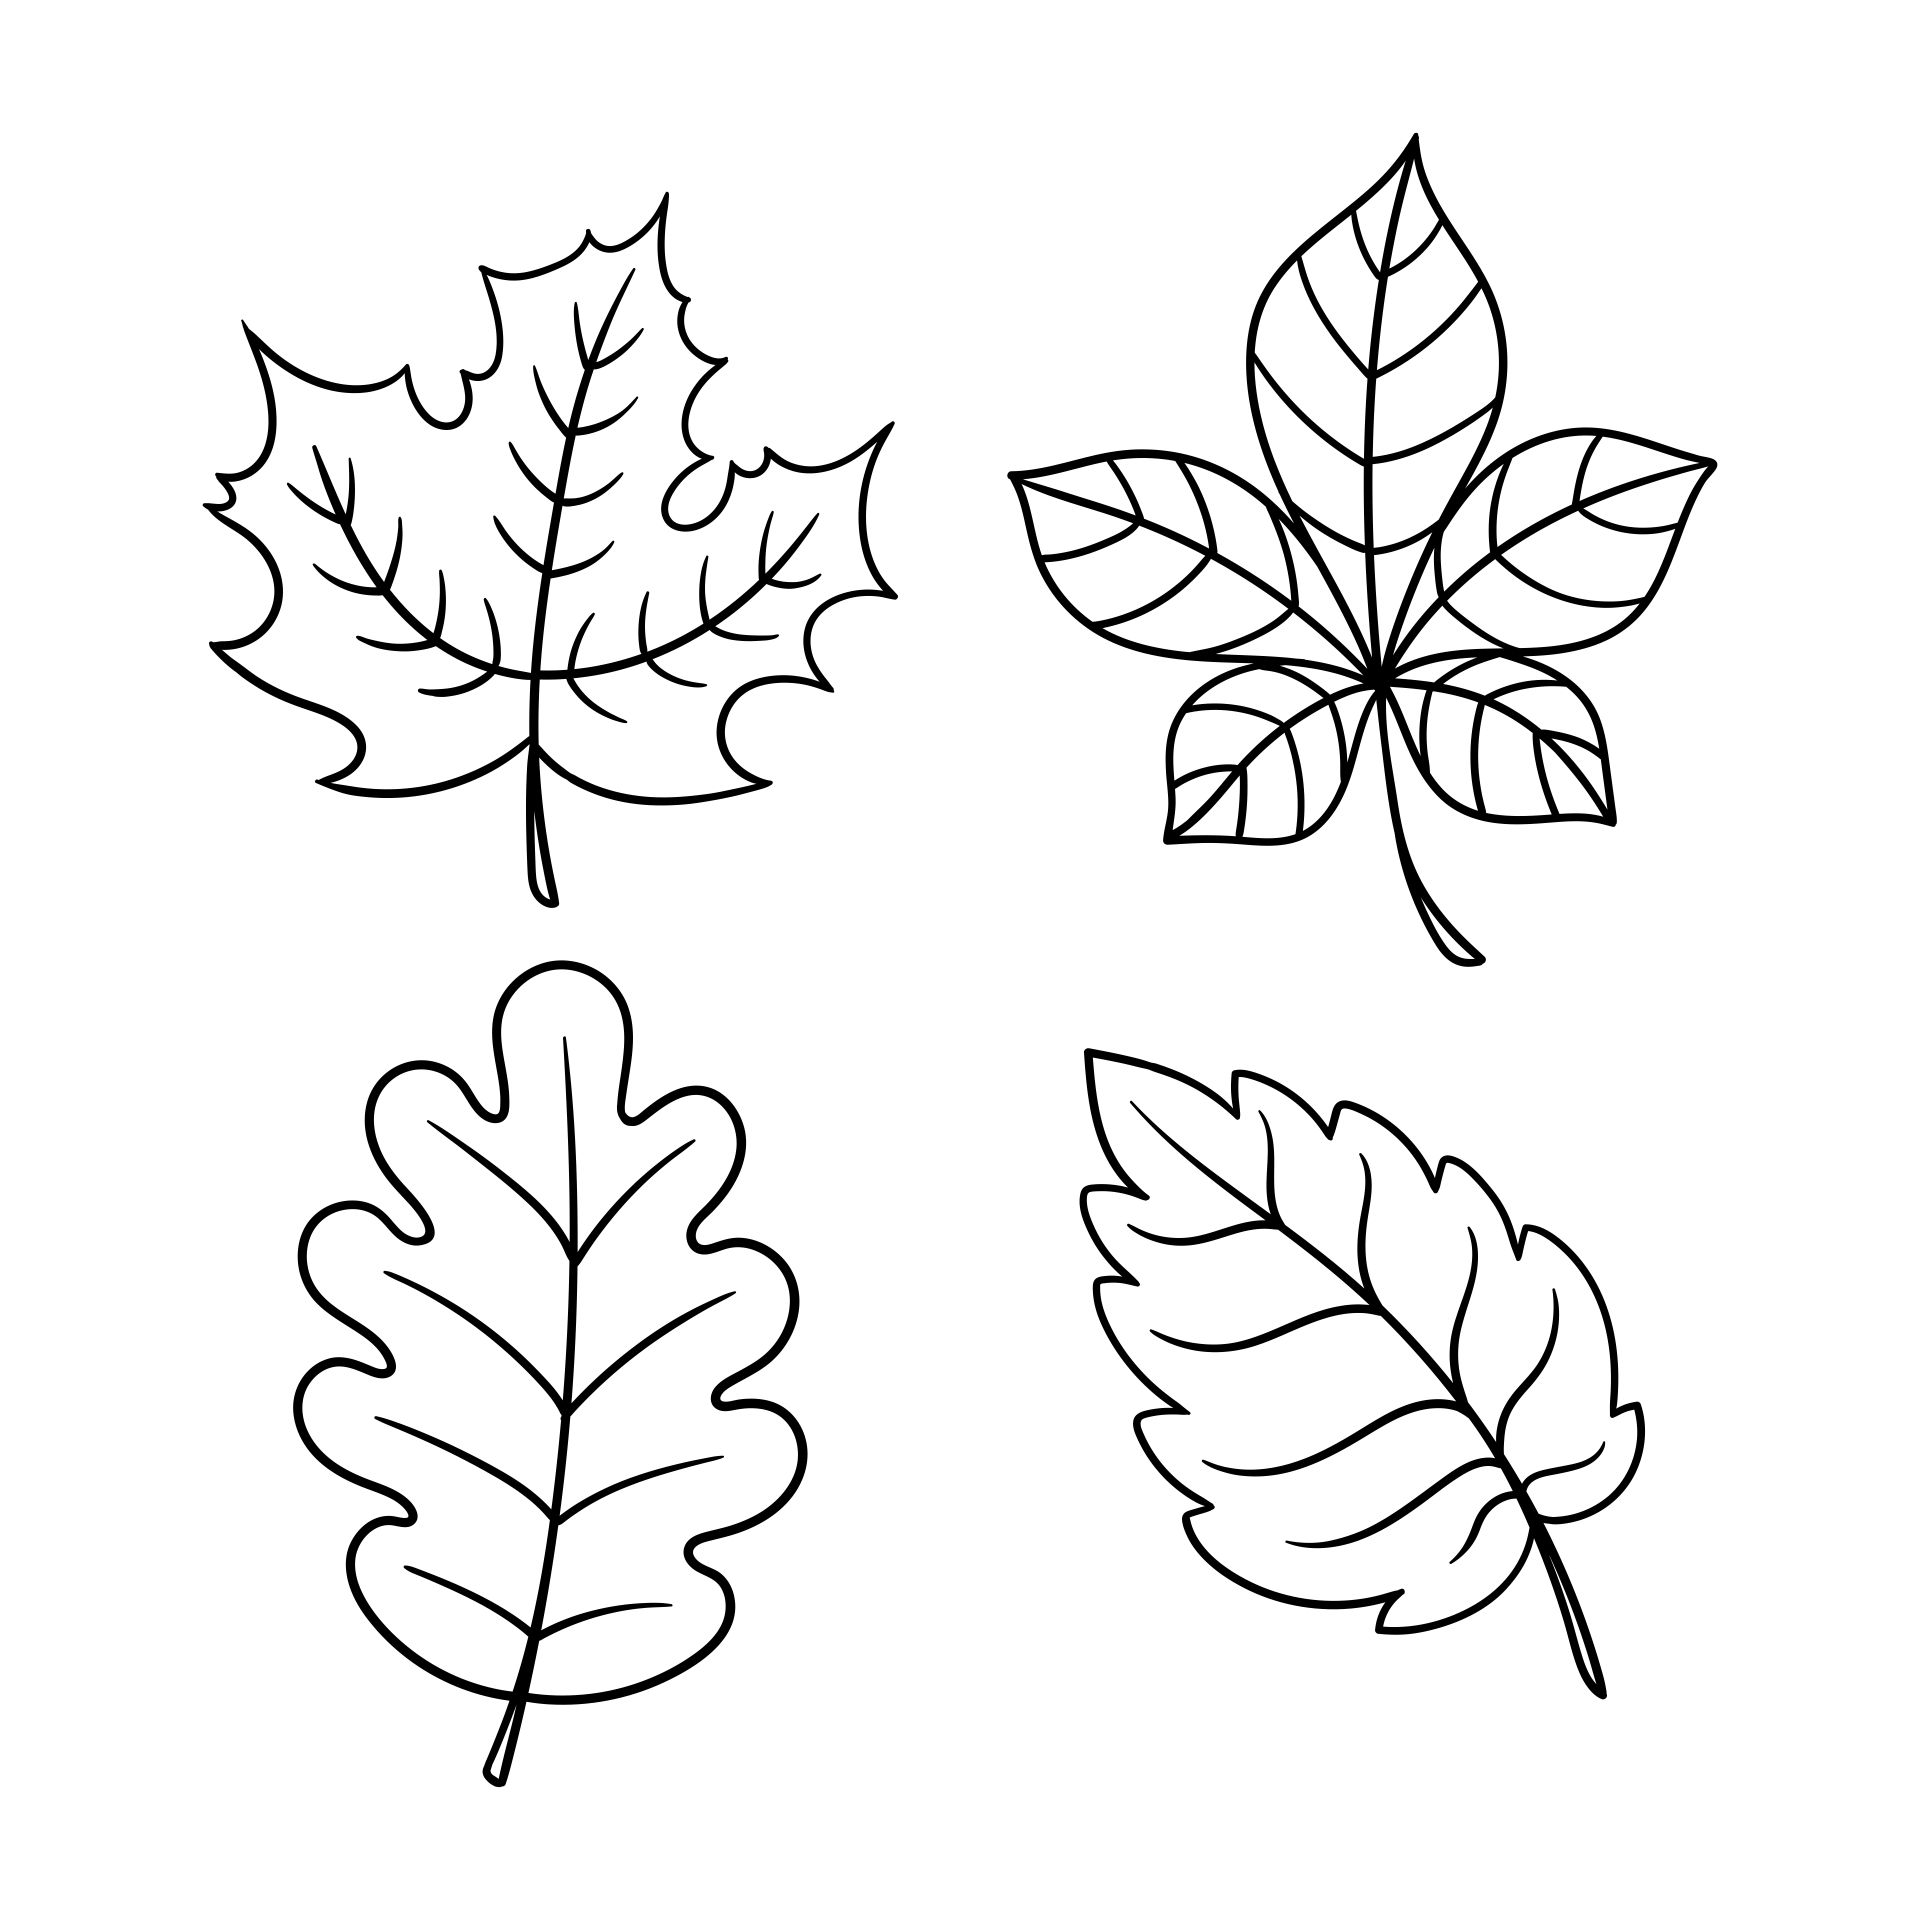 Fall Leaves Printables